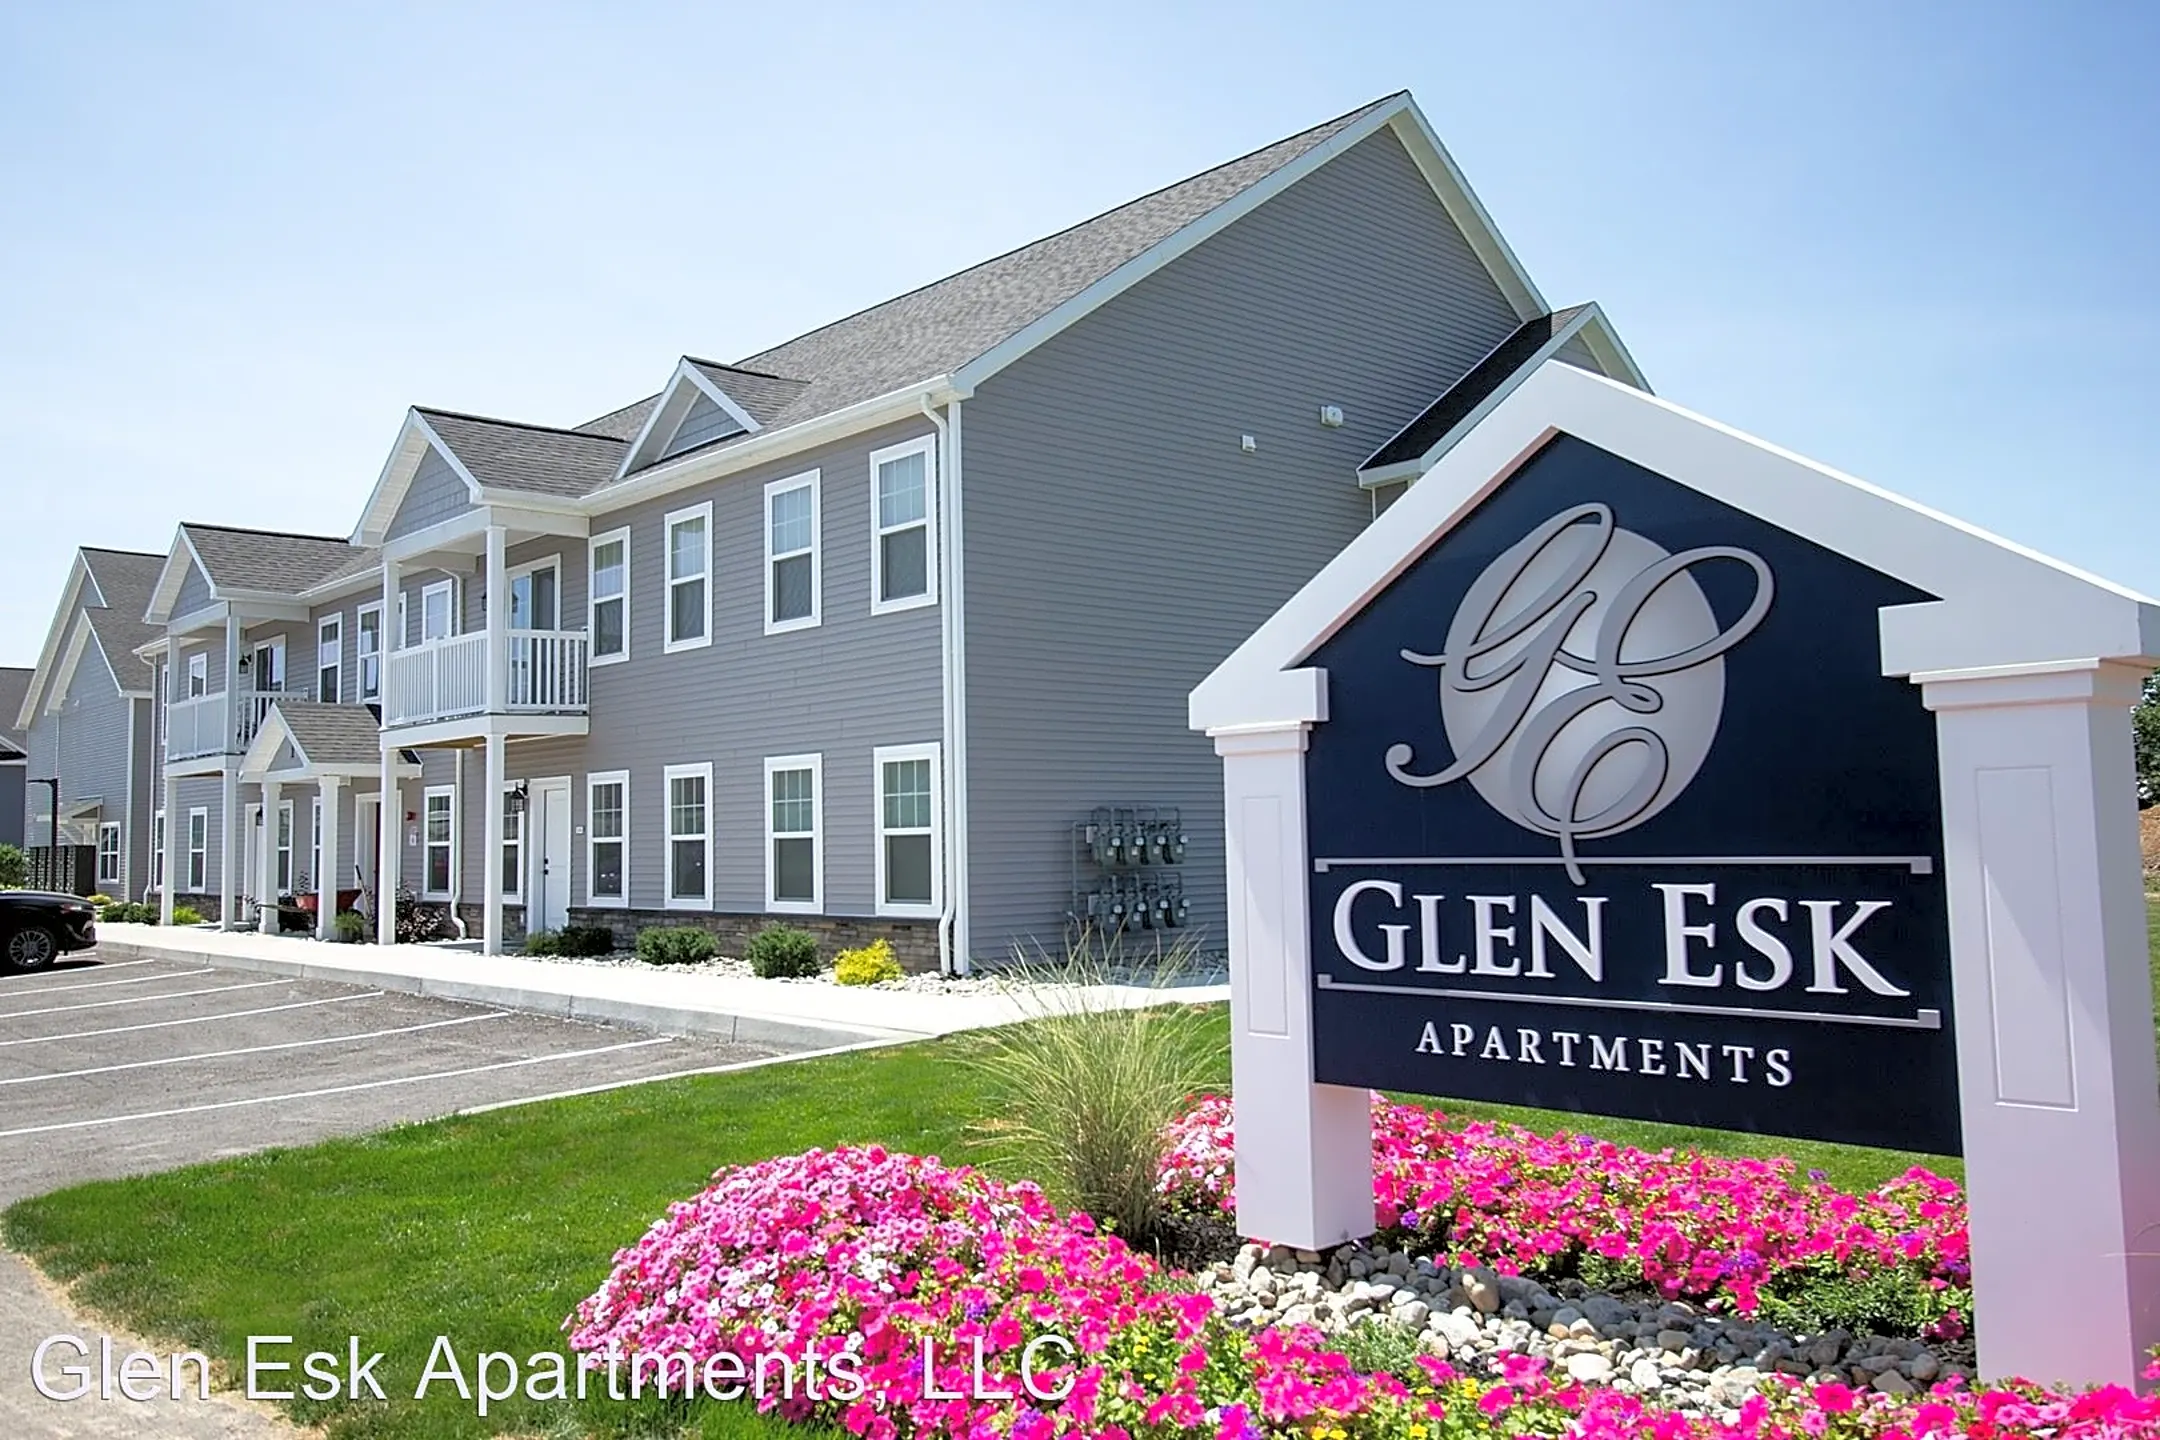 Glen Esk Apartments - Glenville, NY